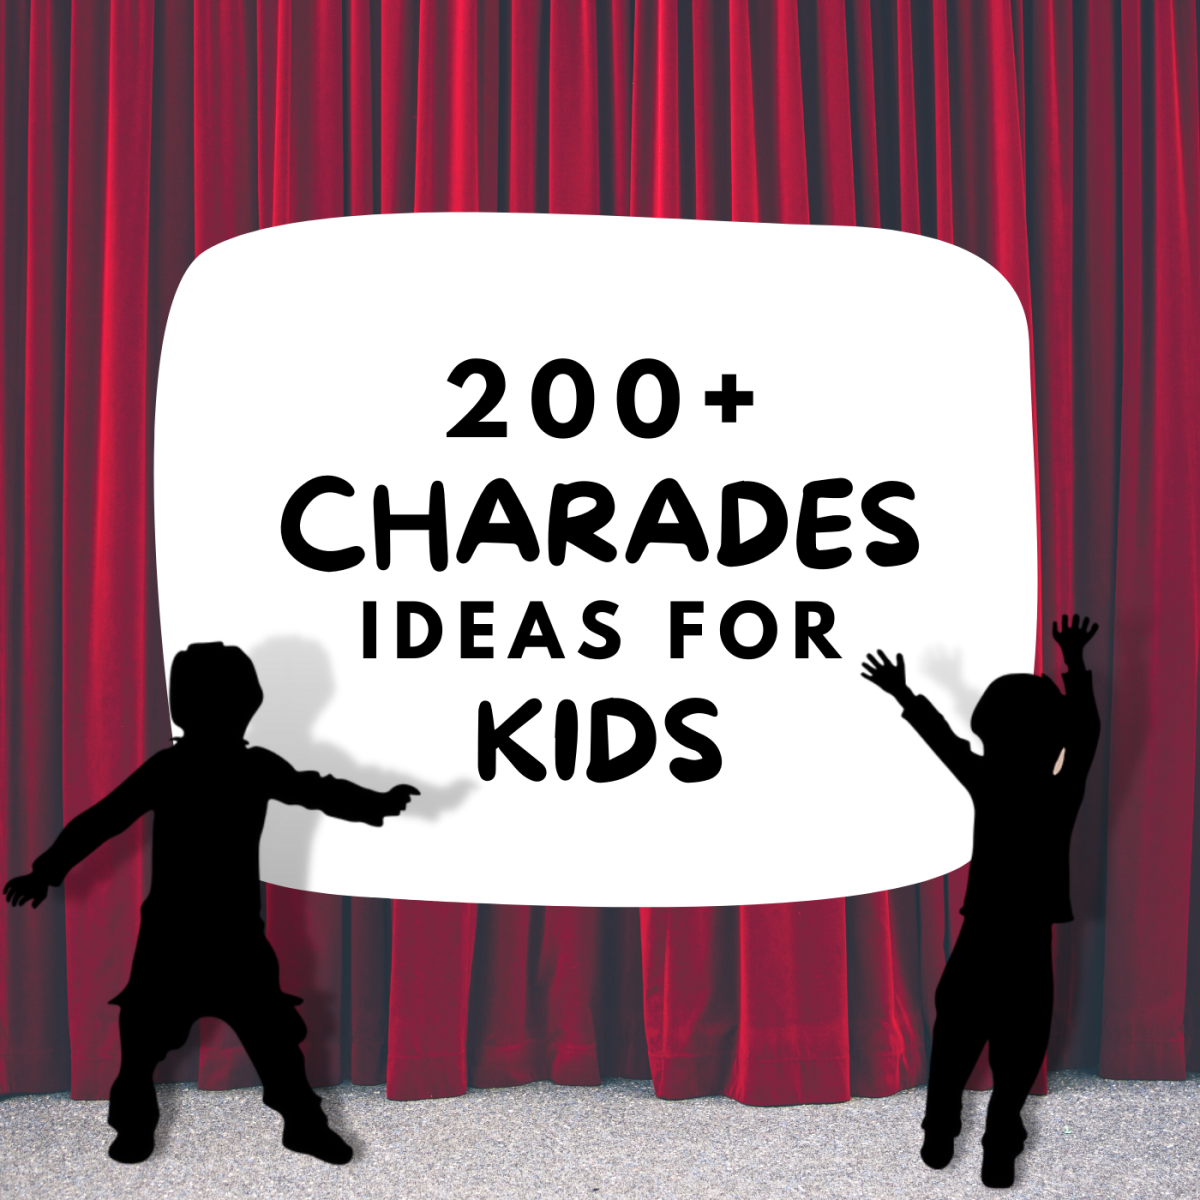 Over 200 family-friendly charades ideas!